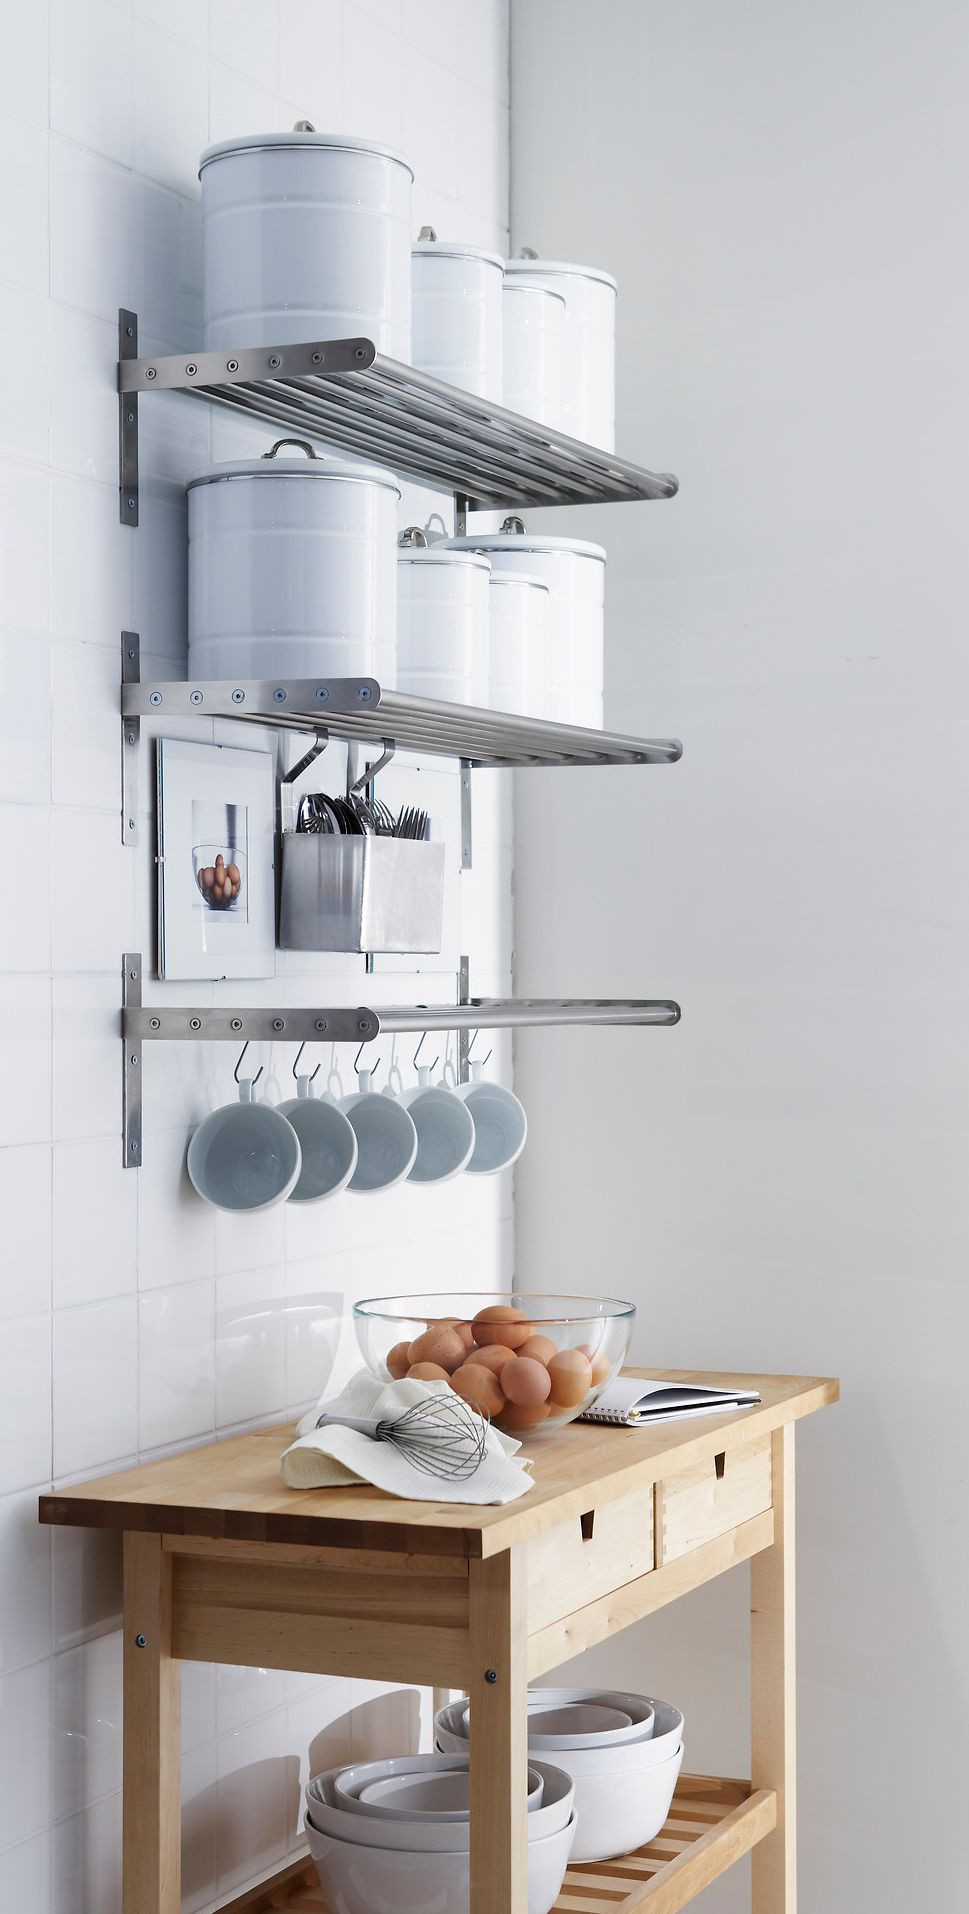 Ikea Kitchen Storage
 65 Ingenious Kitchen Organization Tips And Storage Ideas